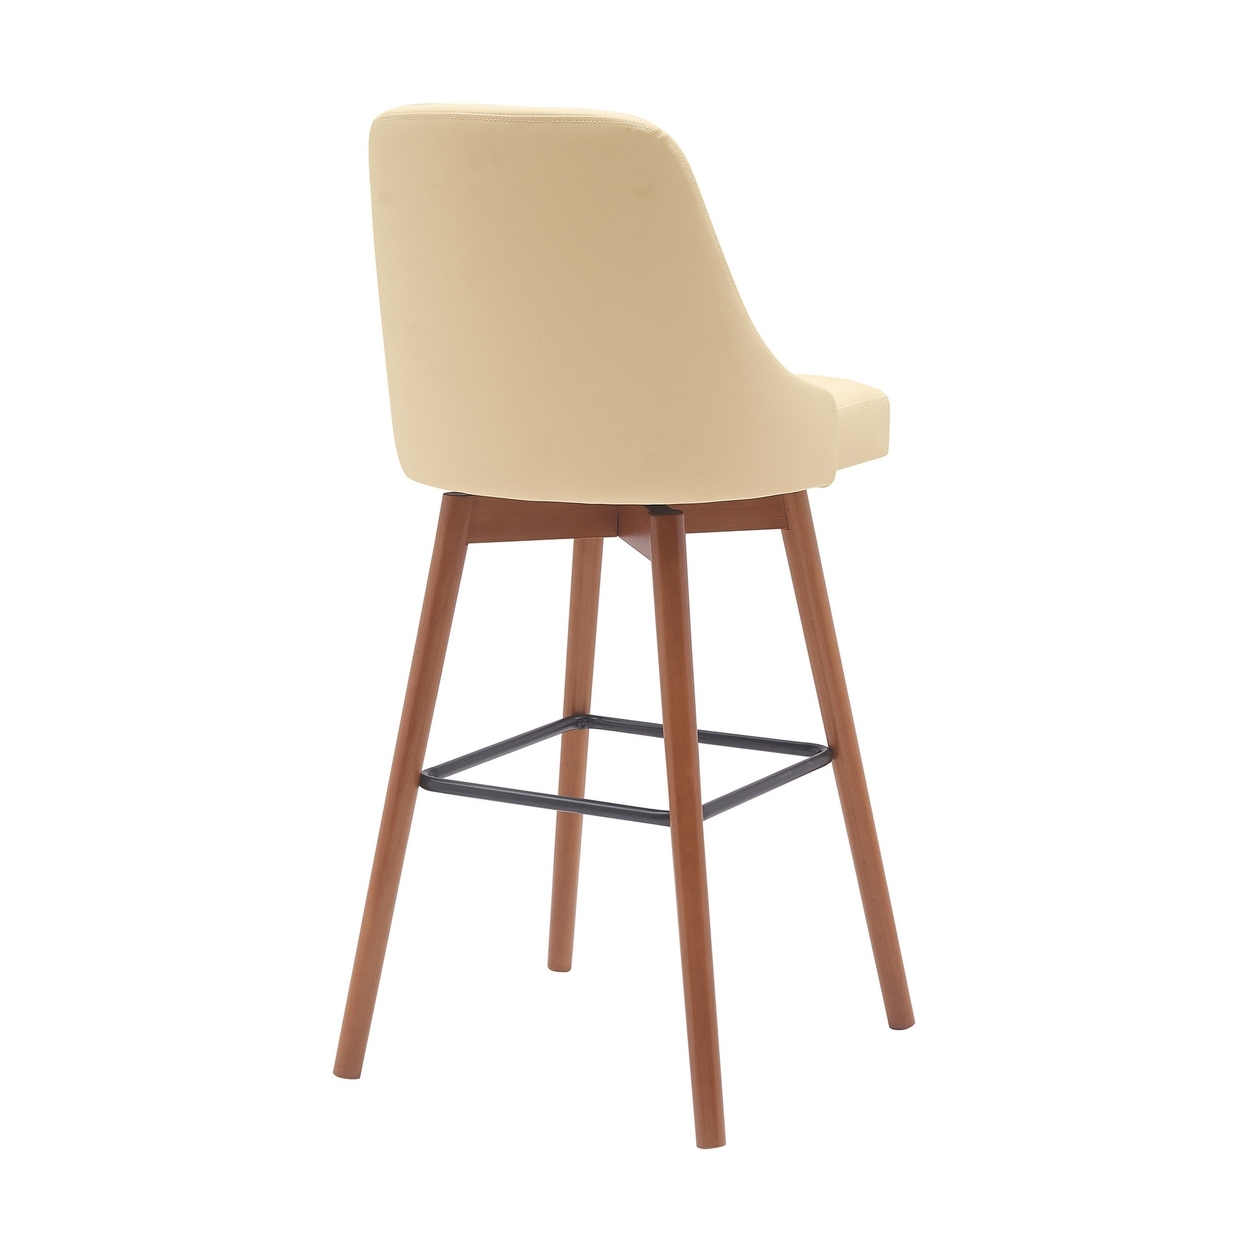 Sean 30 Inch Barstool Chair, Swivel Parson, Cream Faux Leather Walnut Brown - Saltoro Sherpi